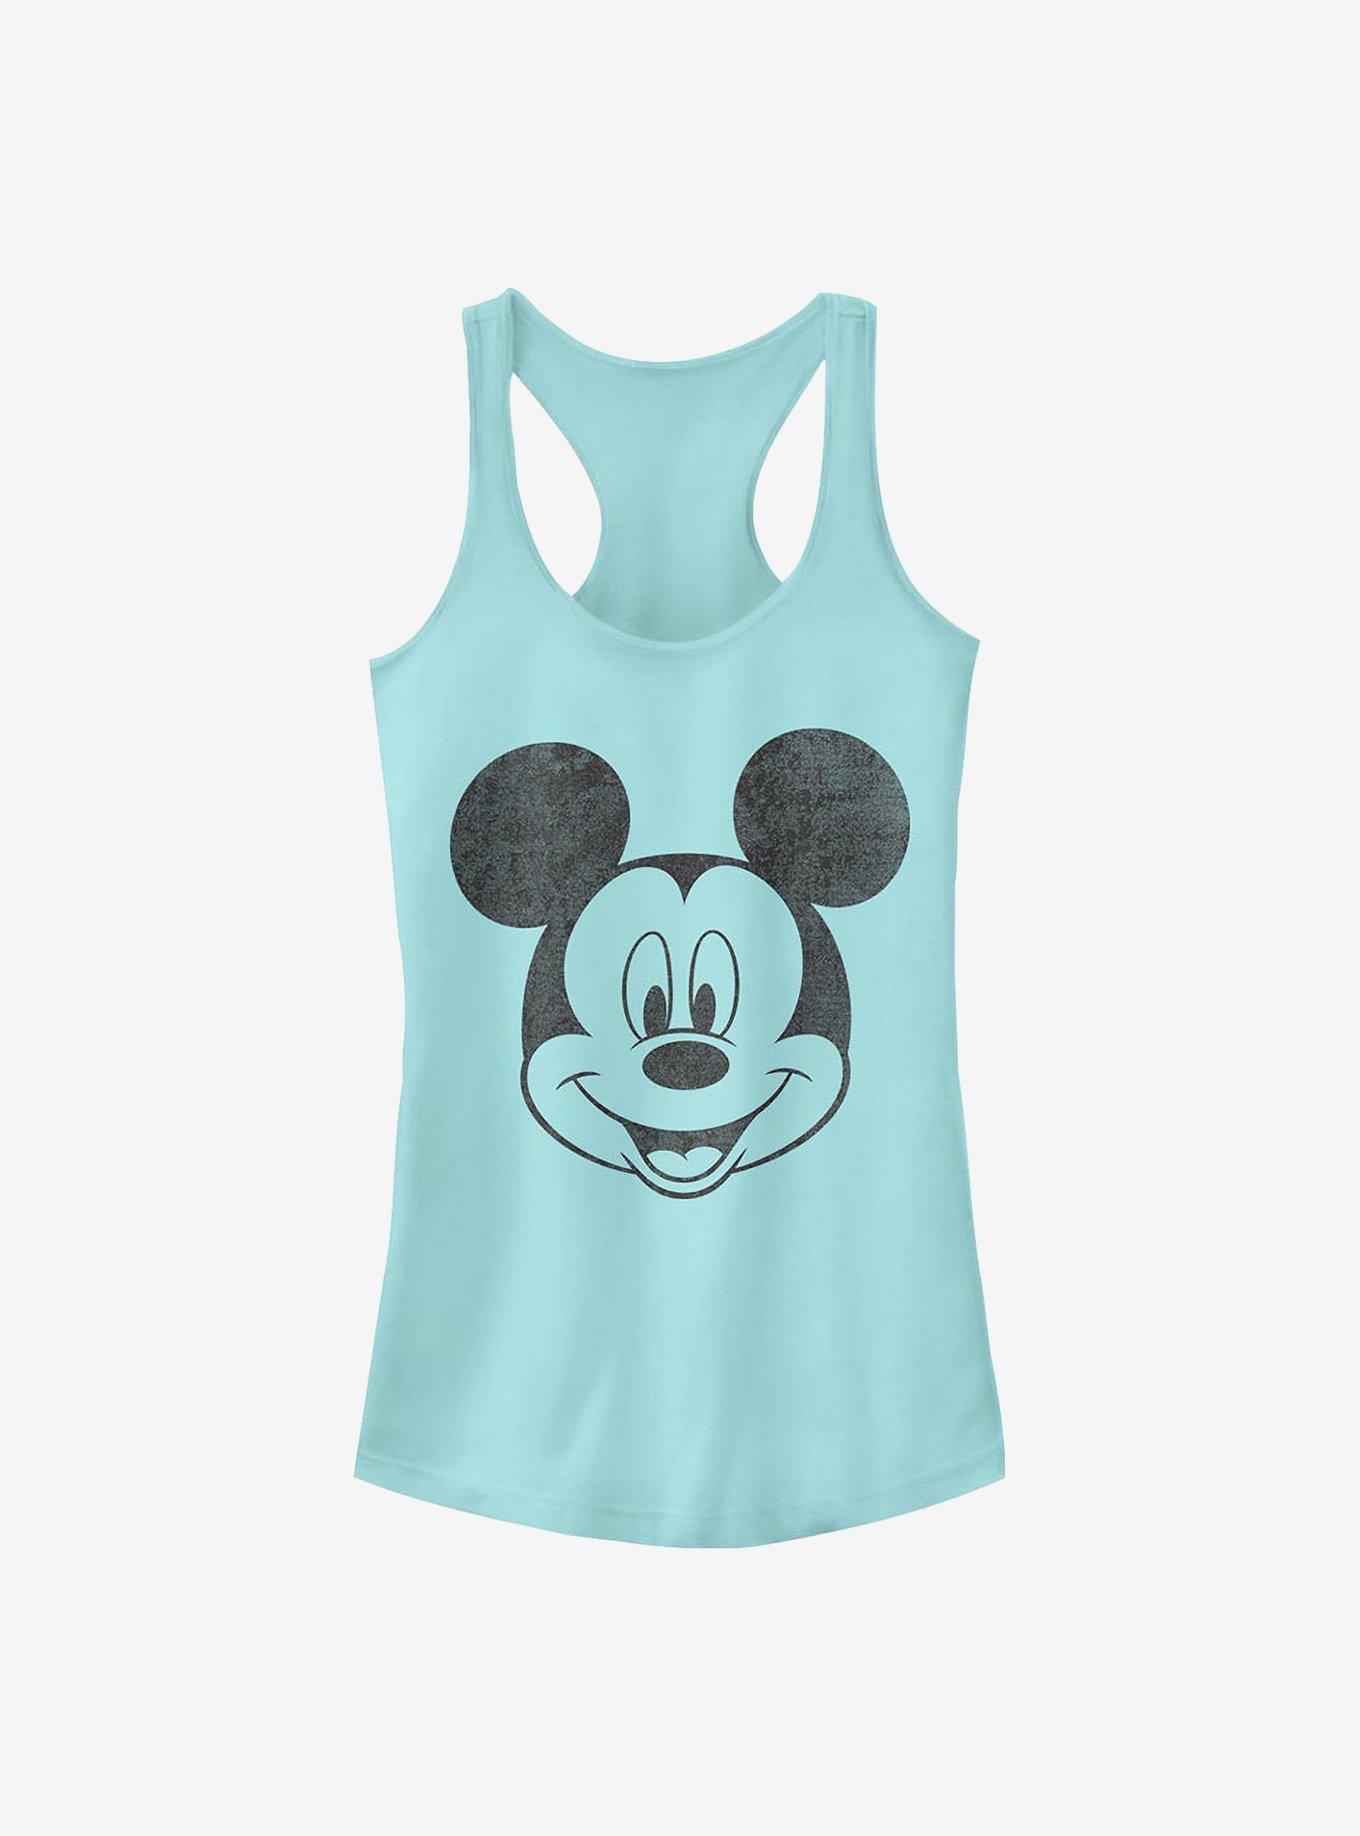 Disney Mickey Mouse Mickey Face Girls Tank, CANCUN, hi-res